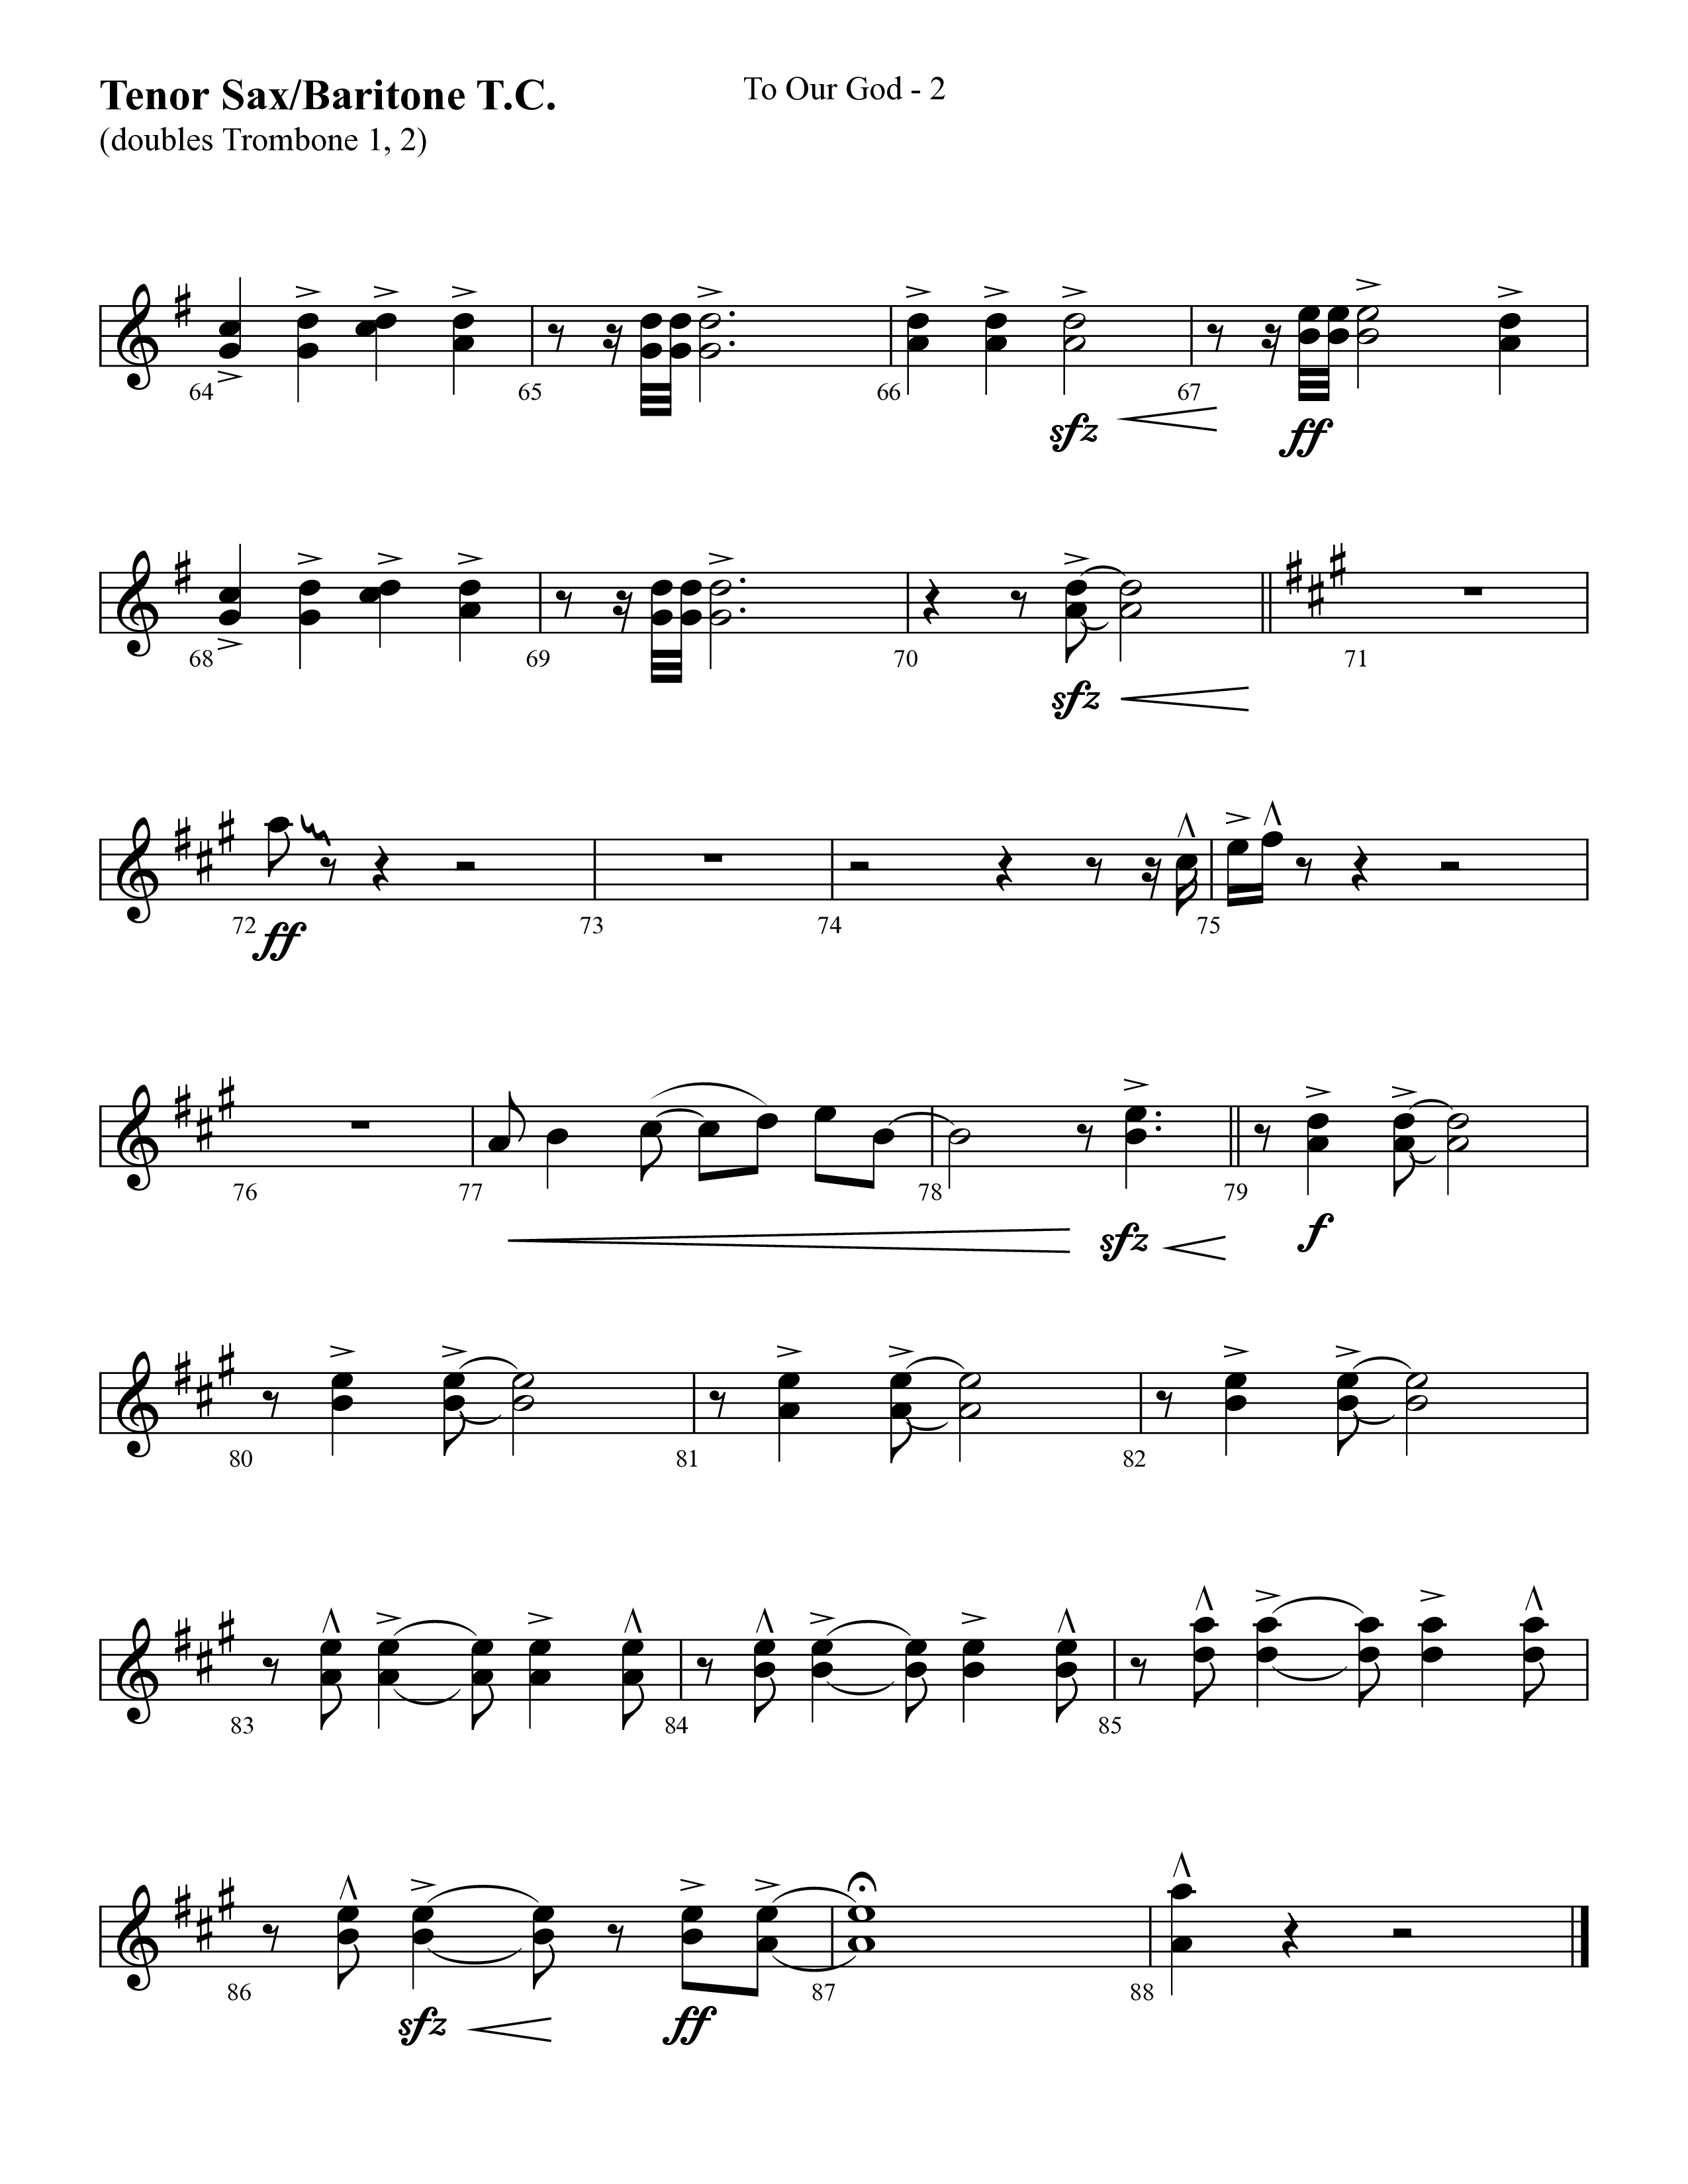 To Our God (Choral Anthem SATB) Tenor Sax/Baritone T.C. (Lifeway Choral / Arr. Cliff Duren)